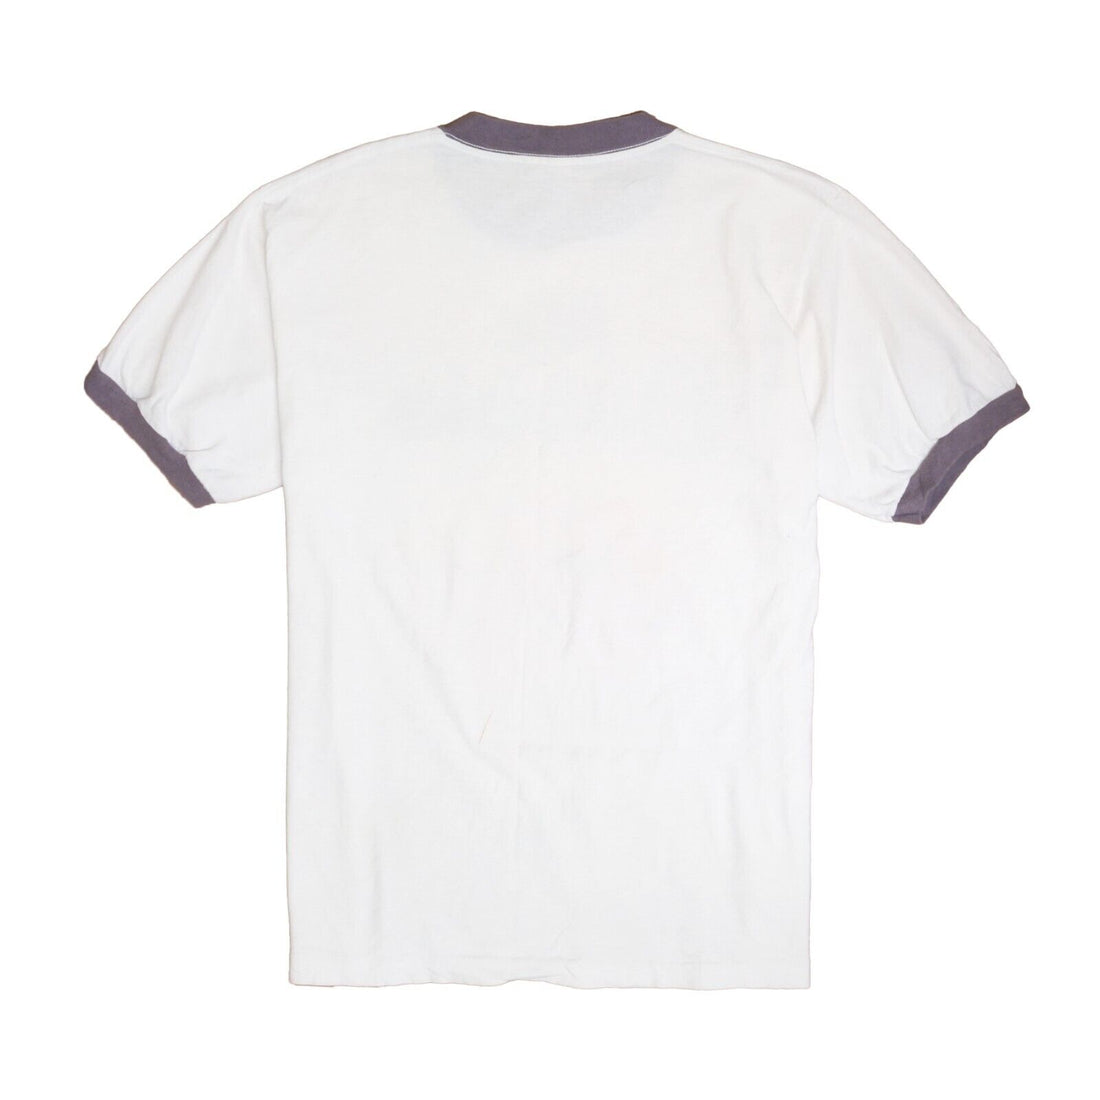 Vintage Mr Bubble Ringer T-Shirt Size Large White 1996 90s